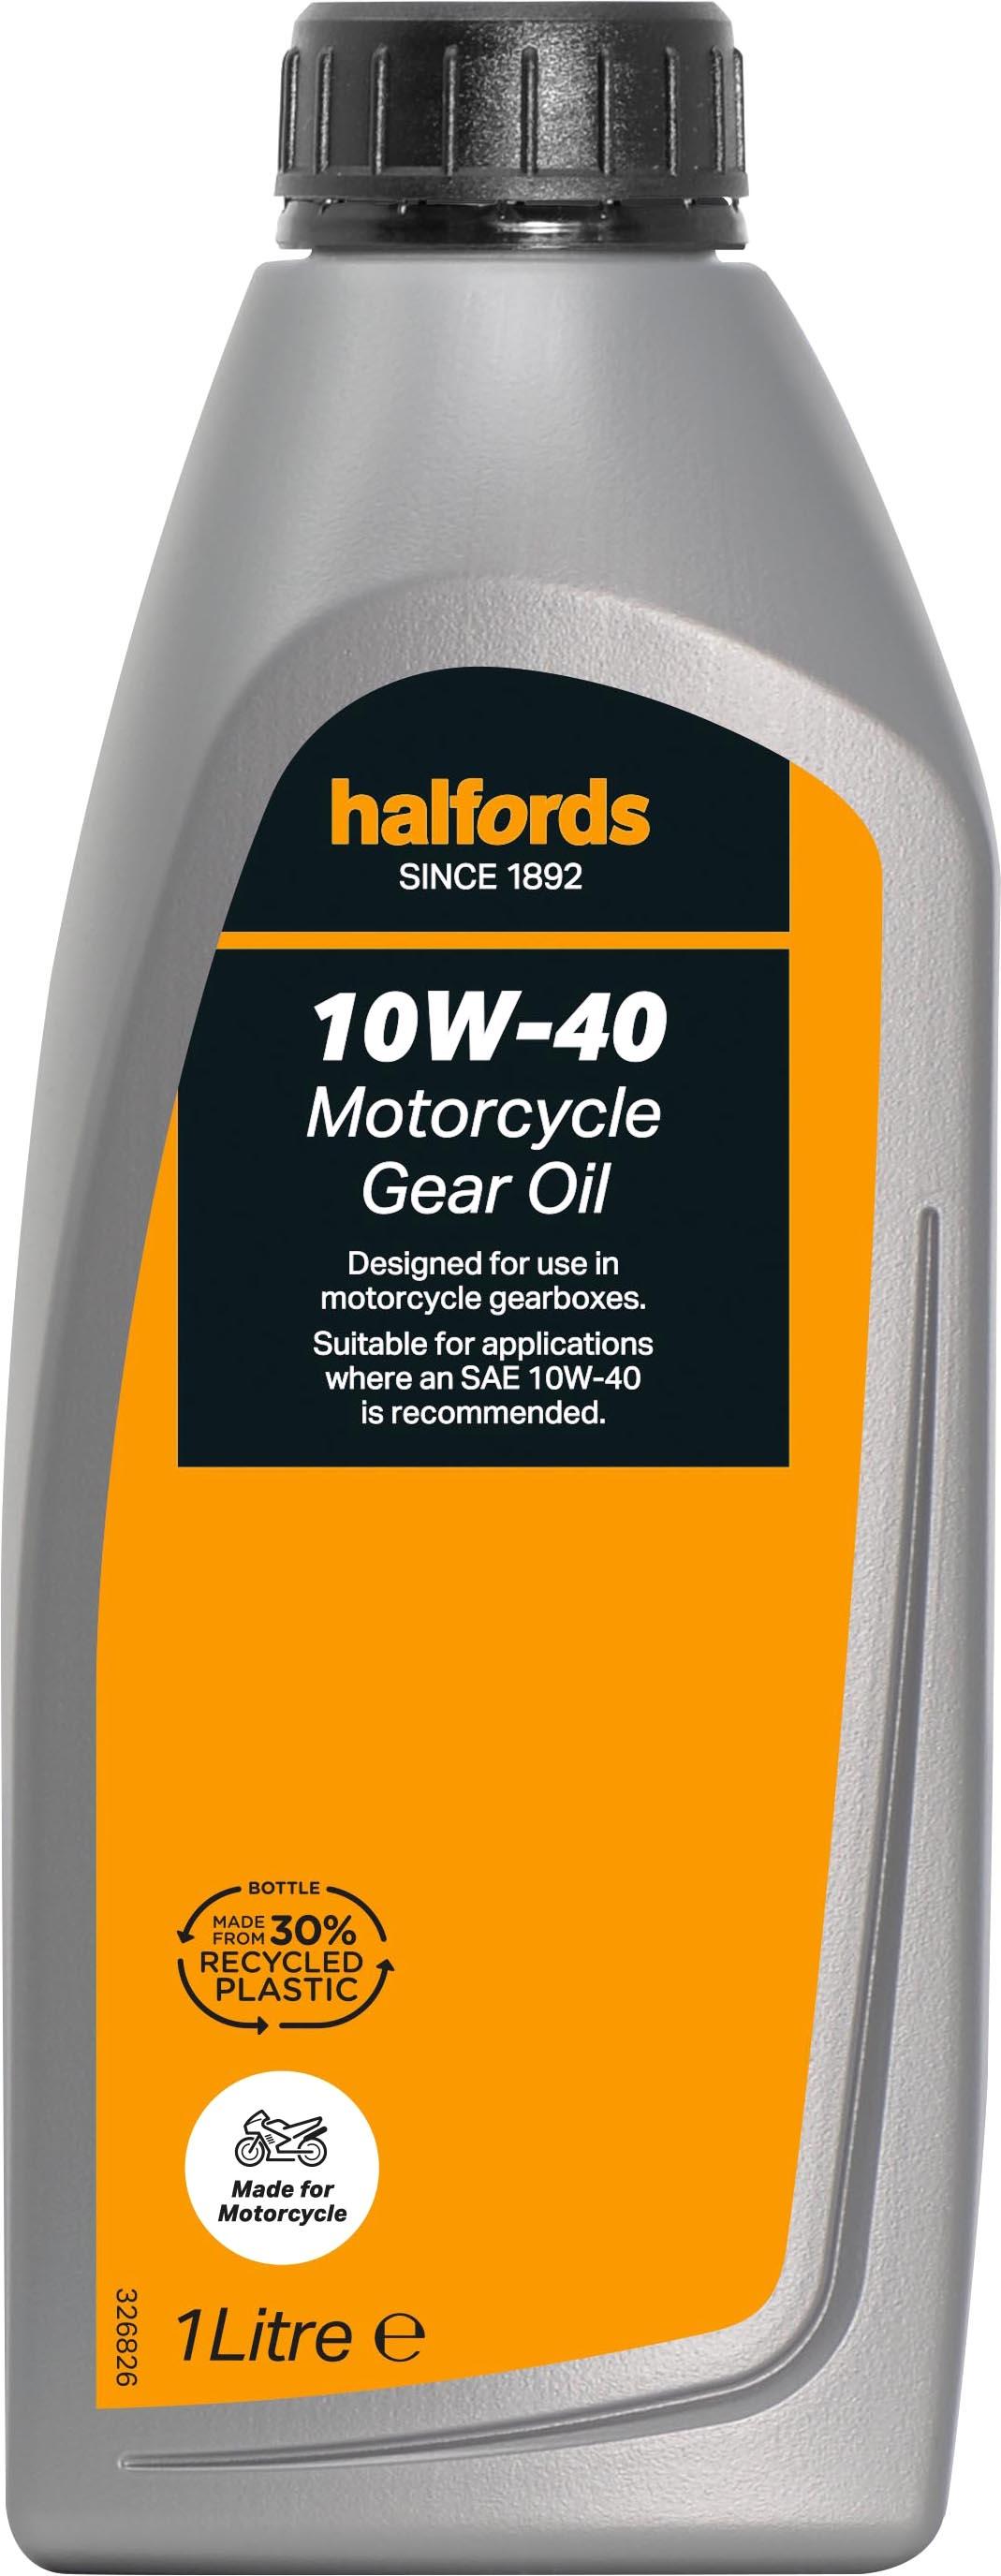 Halfords 10W-40 Motorcycle Oil 1L